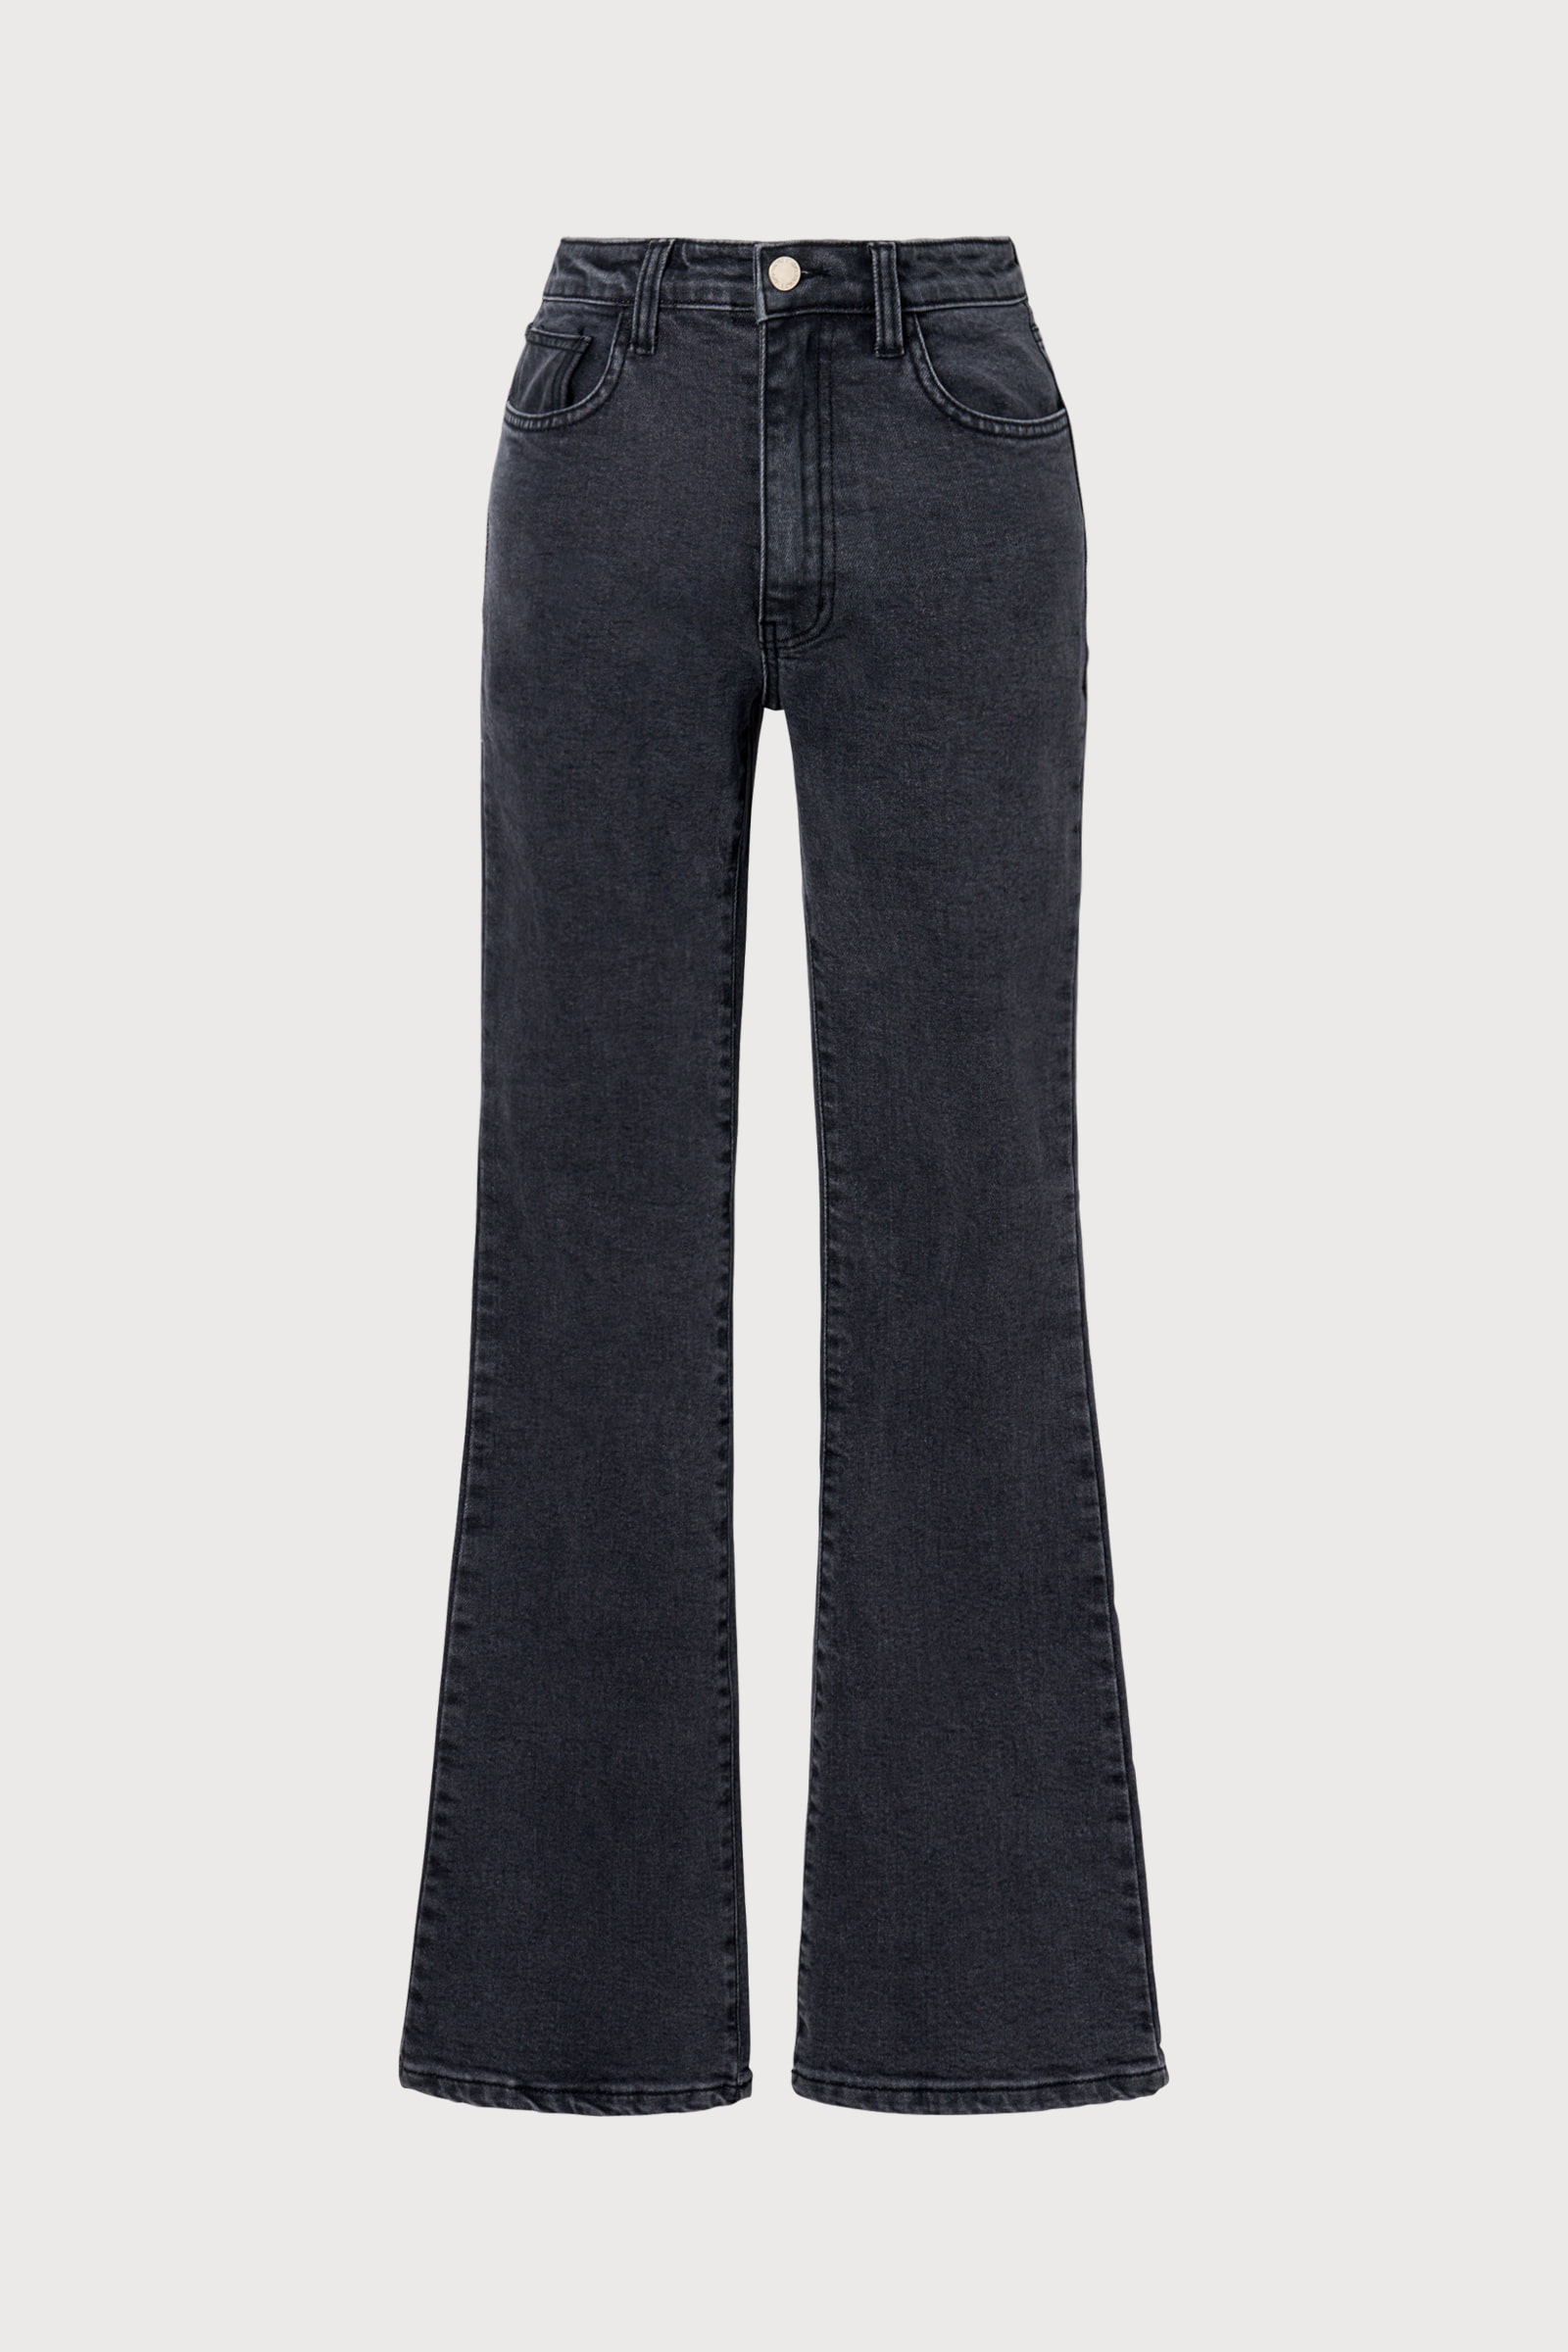 Part.5 Bootscut jeans (gray)